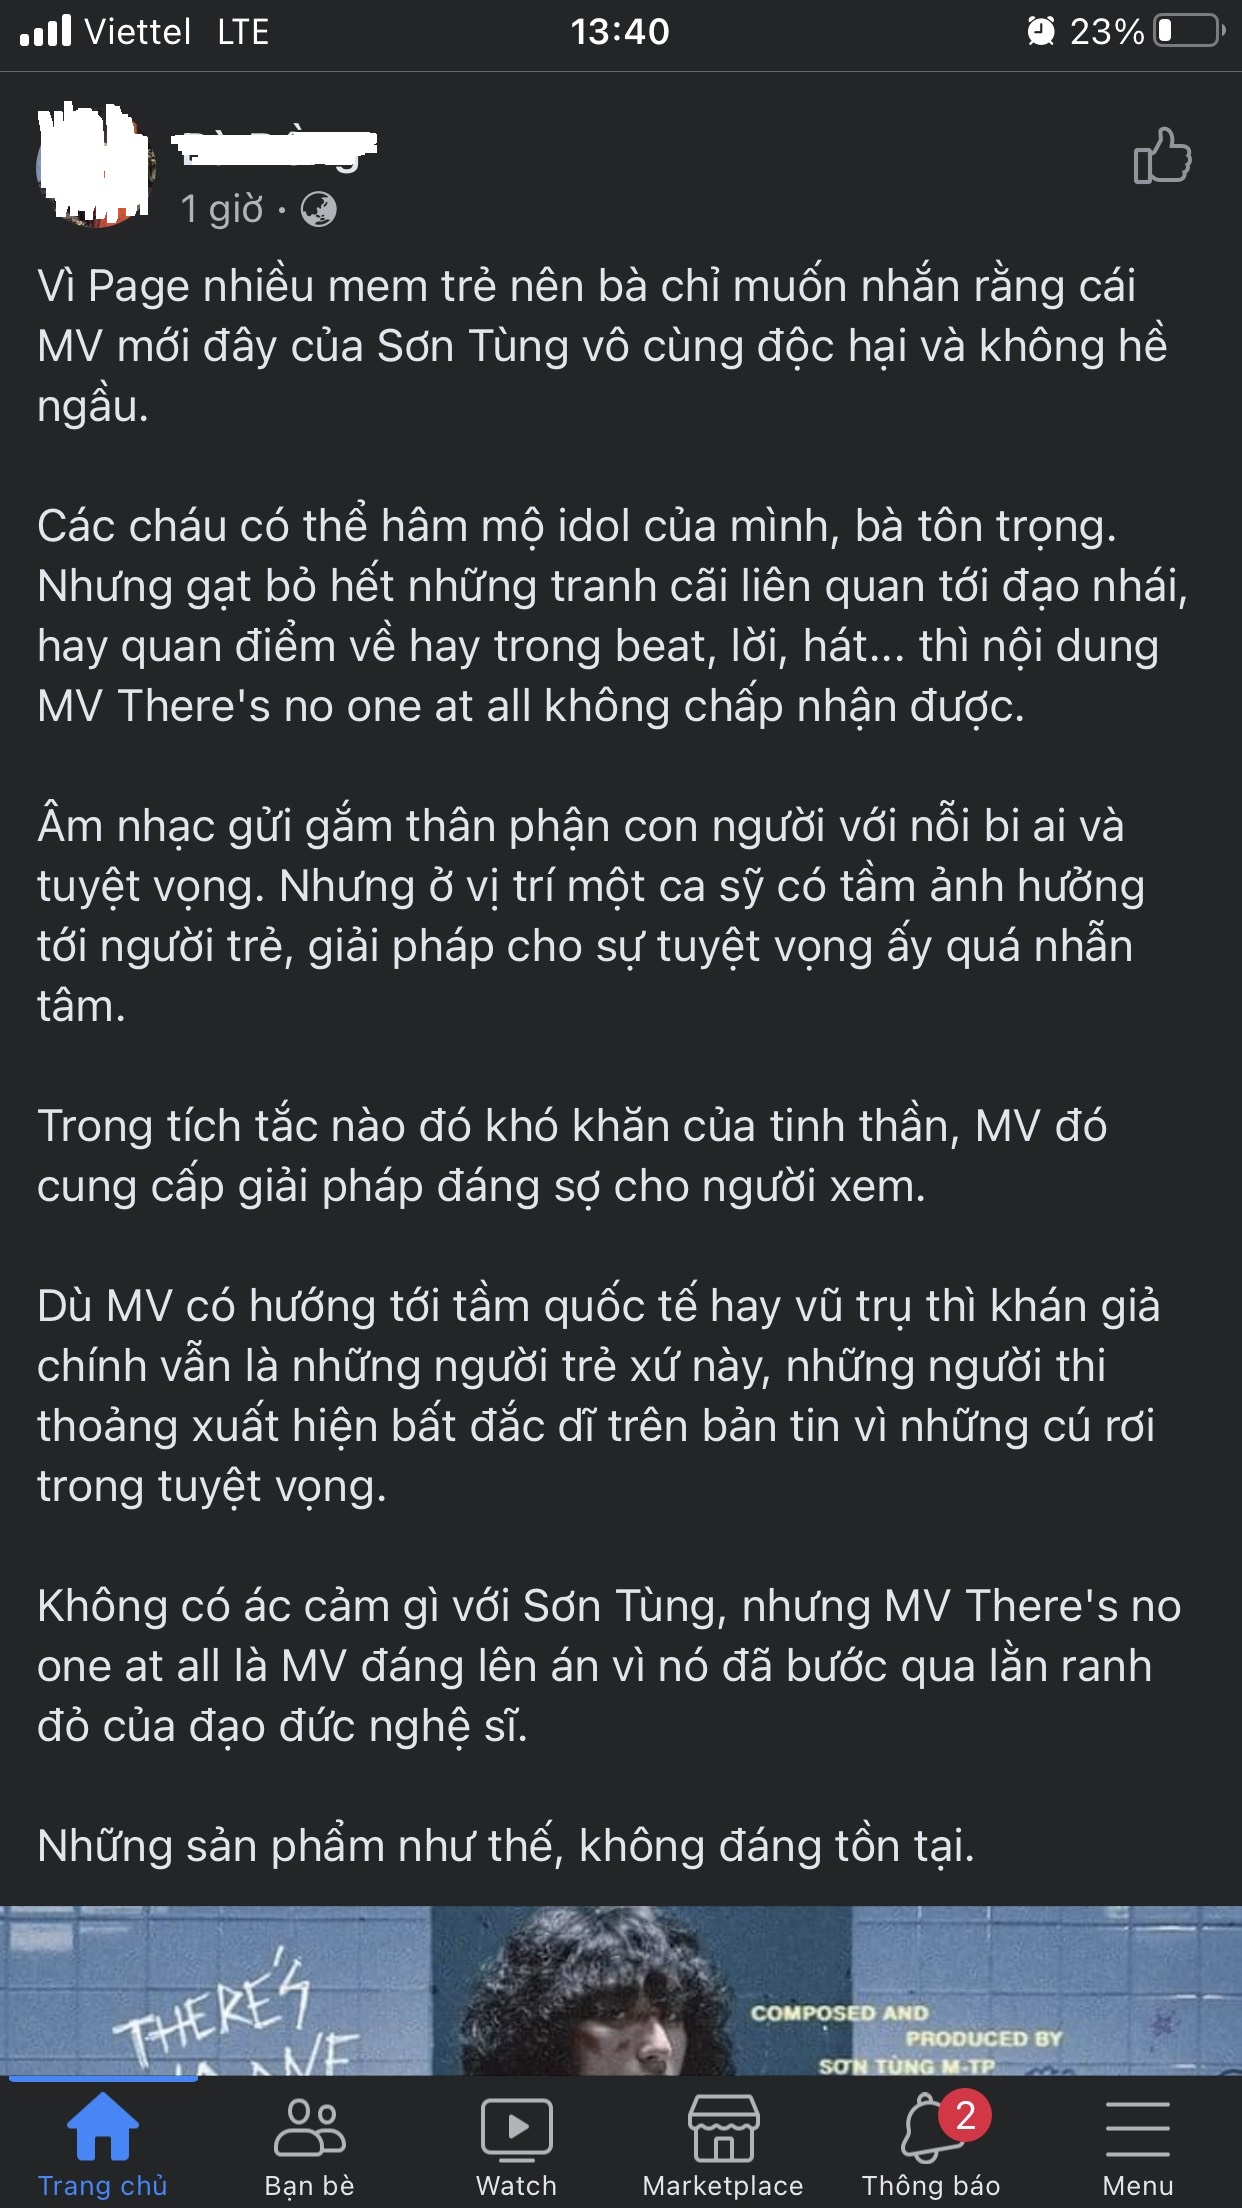 Nhiều KOLS, page kêu gọi report MV Sơn Tùng, từ khoá 'report MV Sơn Tùng' lên 'hot search' - Ảnh 3